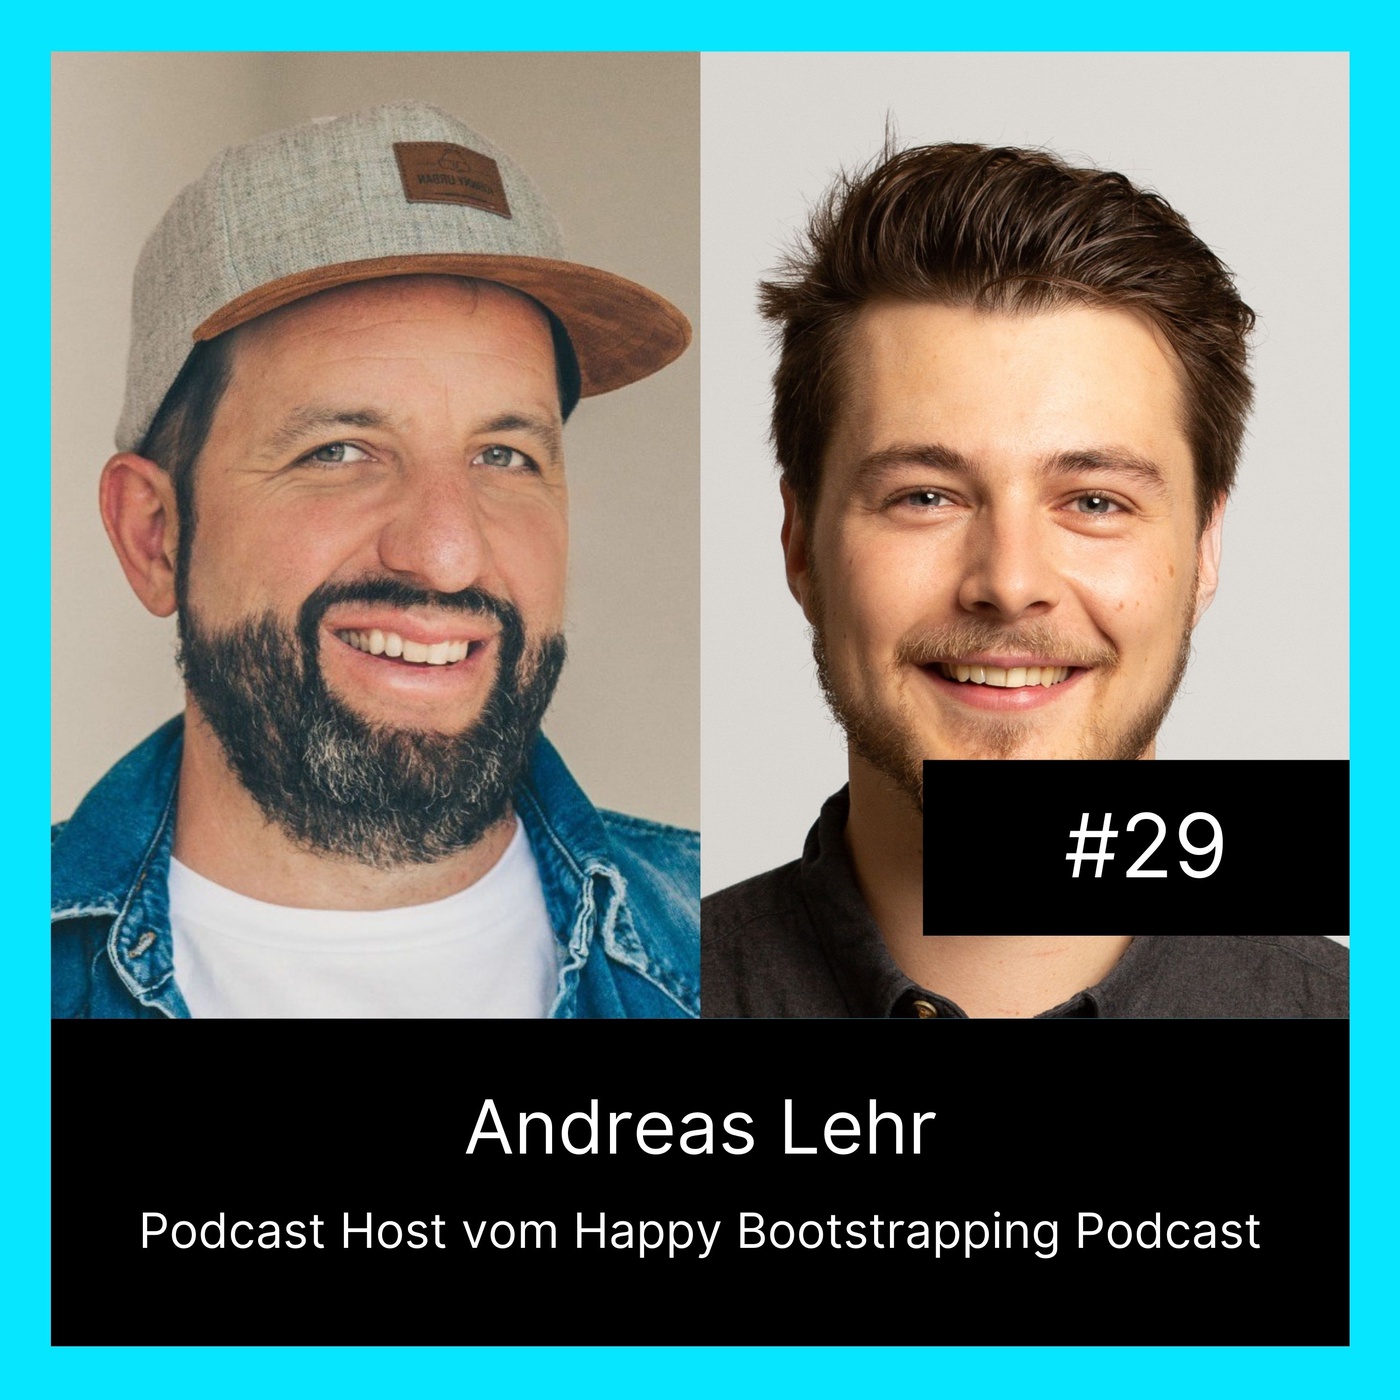 Digitalconomics #29: Wie man Podcasting, Job und Familie balanciert - mit Andreas Lehr vom Happy Bootstrapping Podcast